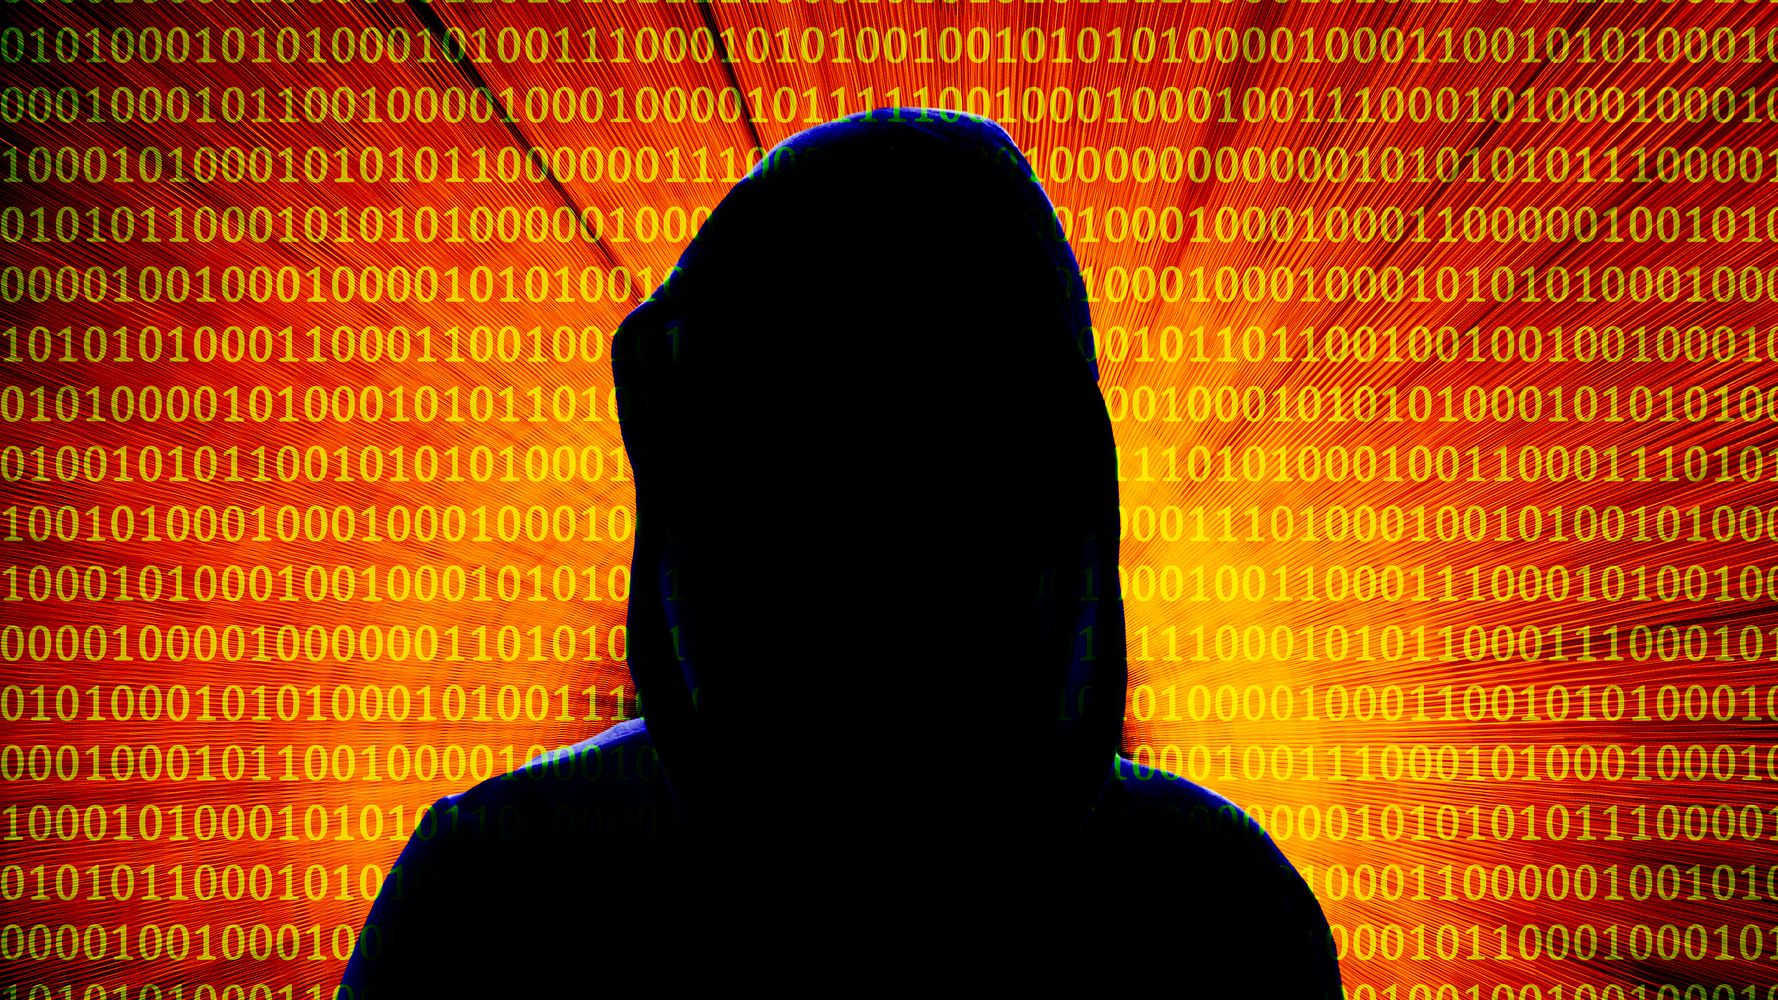 Ukraine denounces a massive cyberattack against government websites